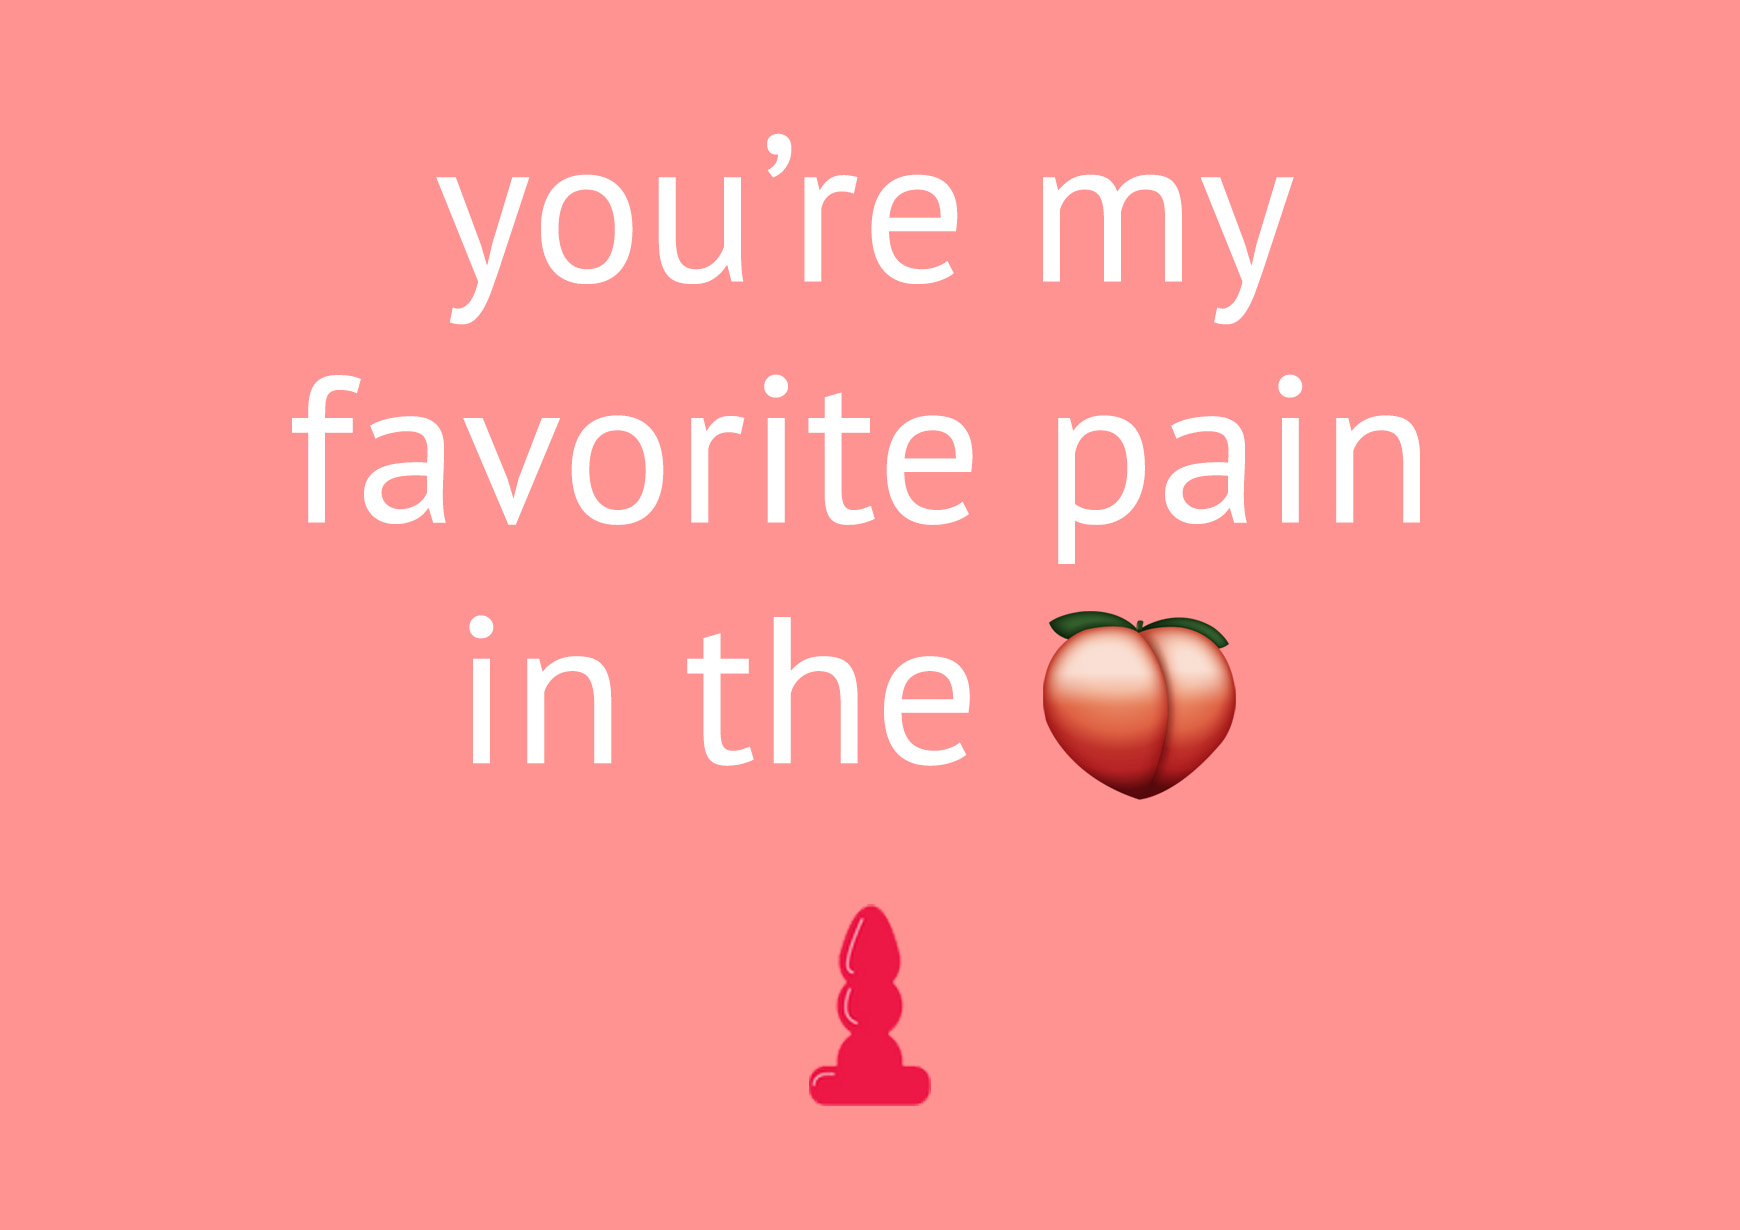 You're my favorite pain in the peach emoji